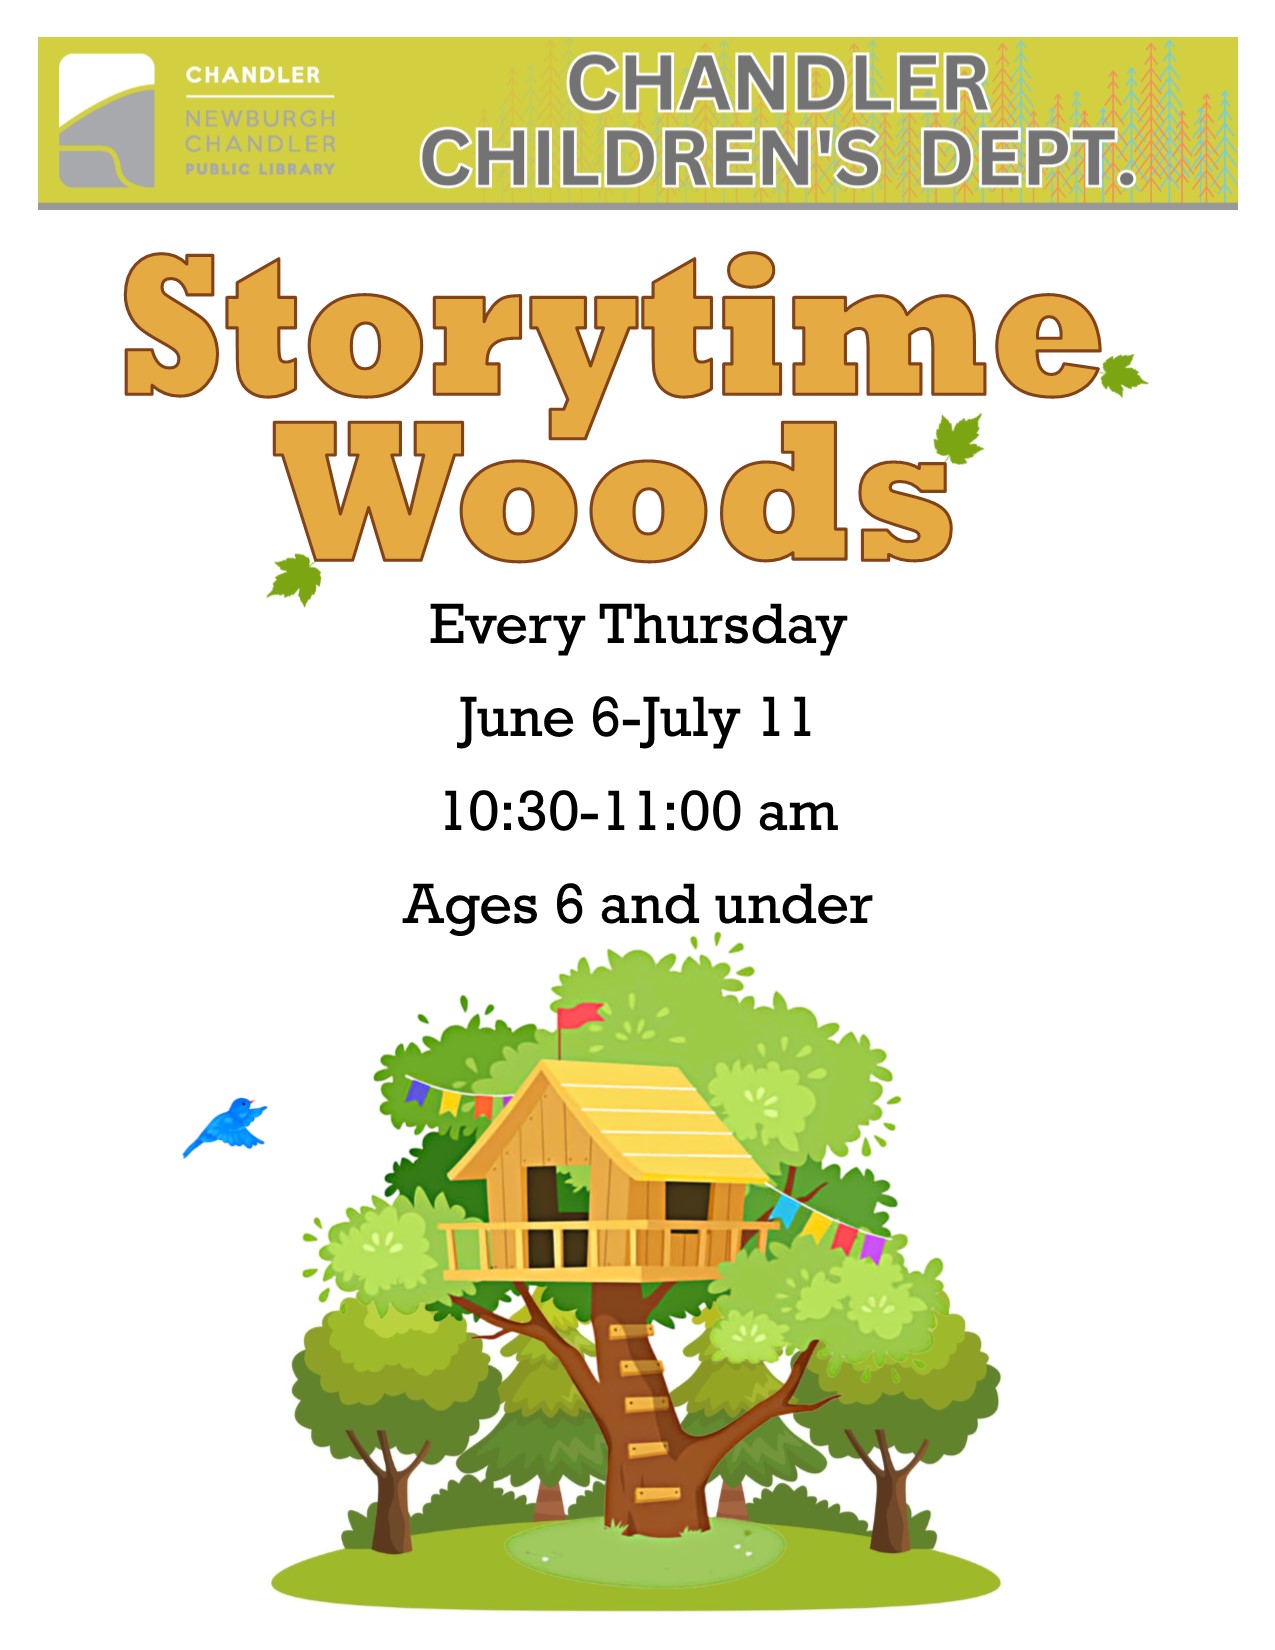 Chandler Children's- Storytime Woods @ Newburgh Chandler Public Library | Chandler | Indiana | United States